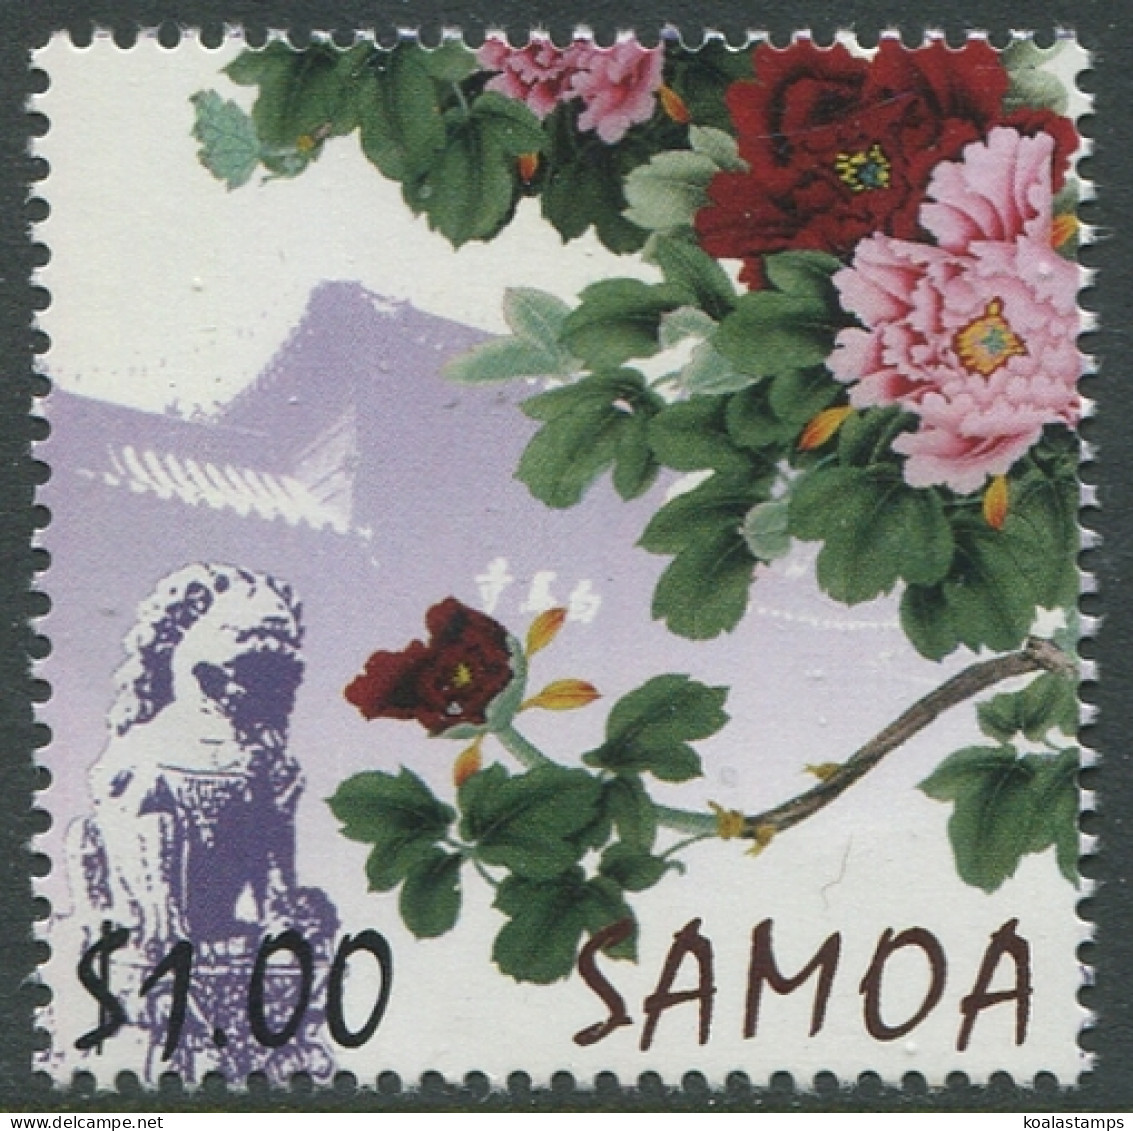 Samoa 2009 SG1210 $1 Peonies MNH - Samoa